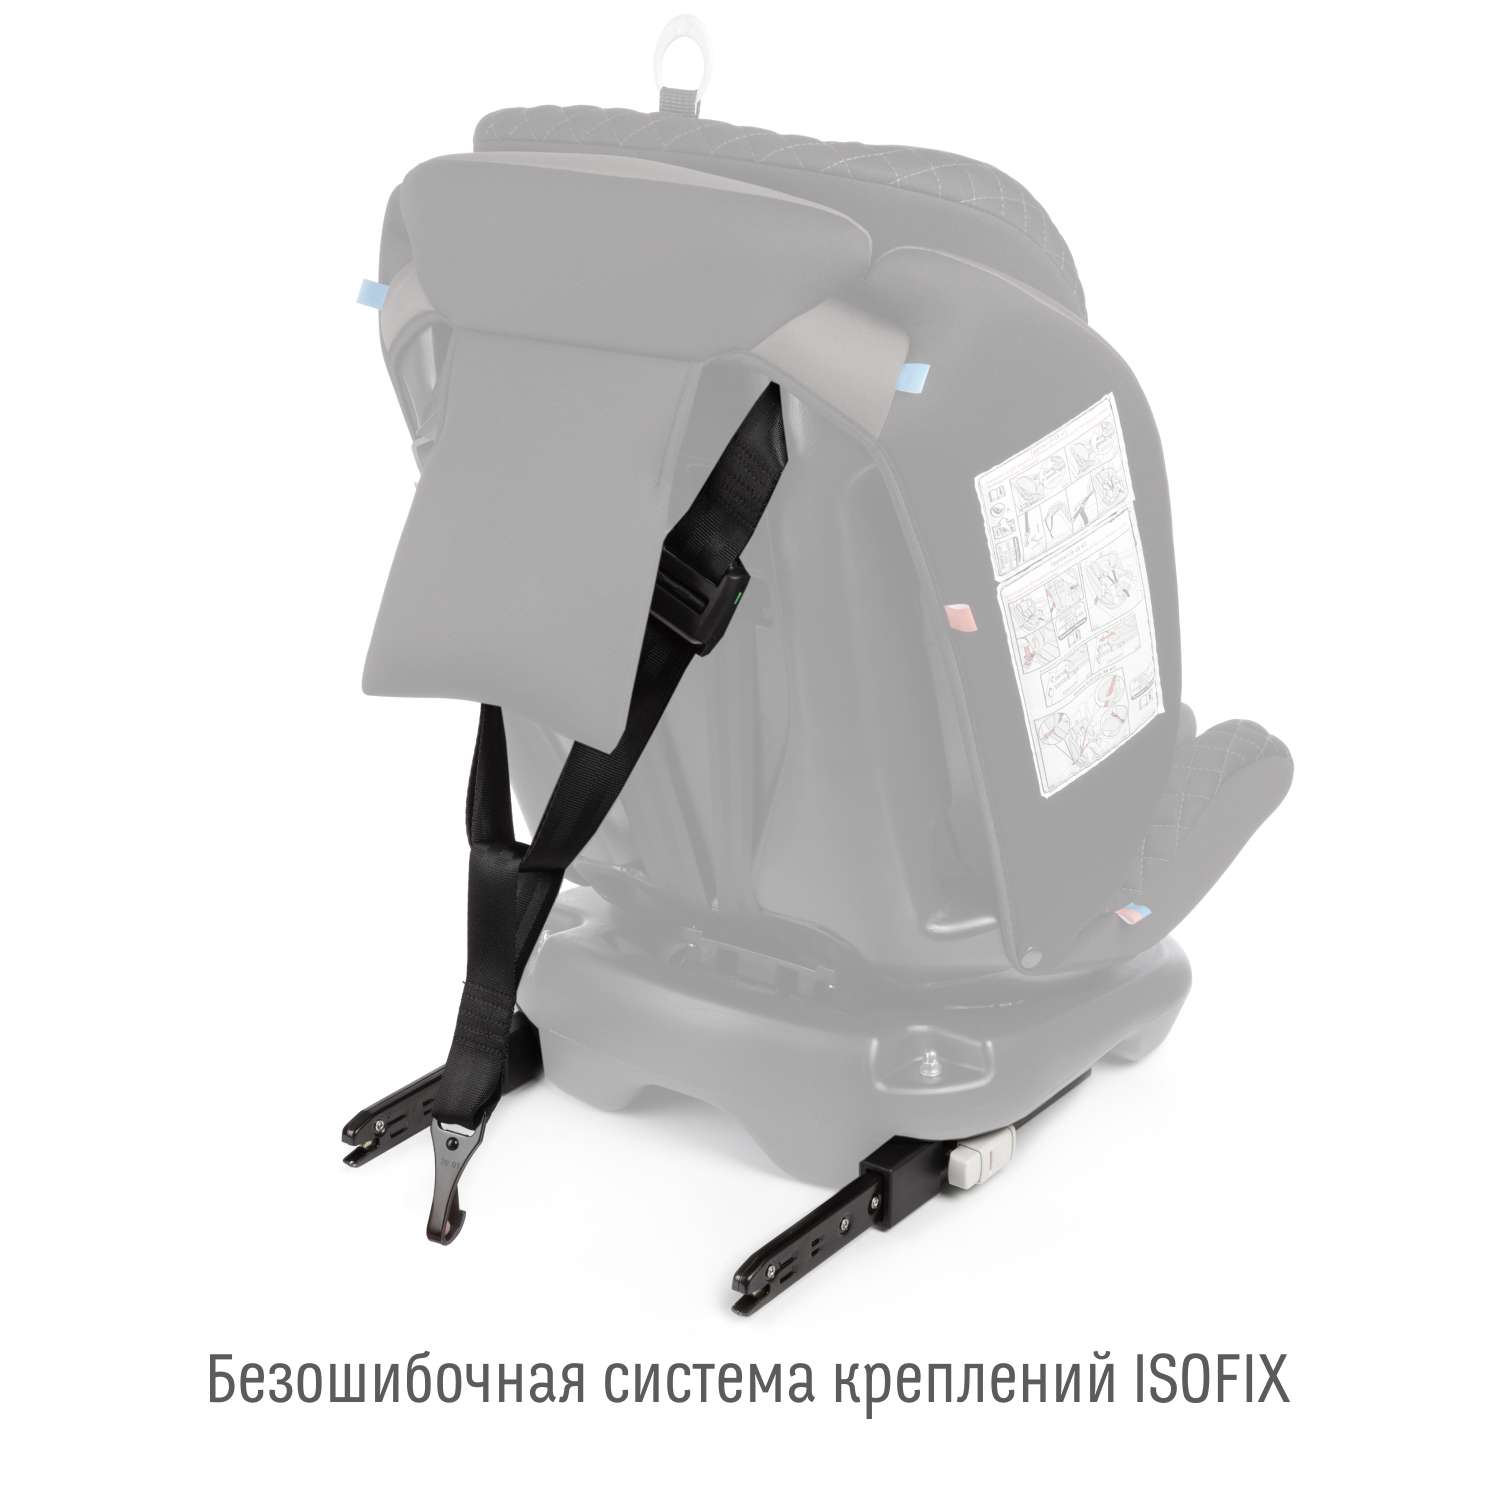 Автомобильное кресло SmartTravel УУД Smart Travel Boss Isofix гр.0+/I/II/III смоки - фото 8